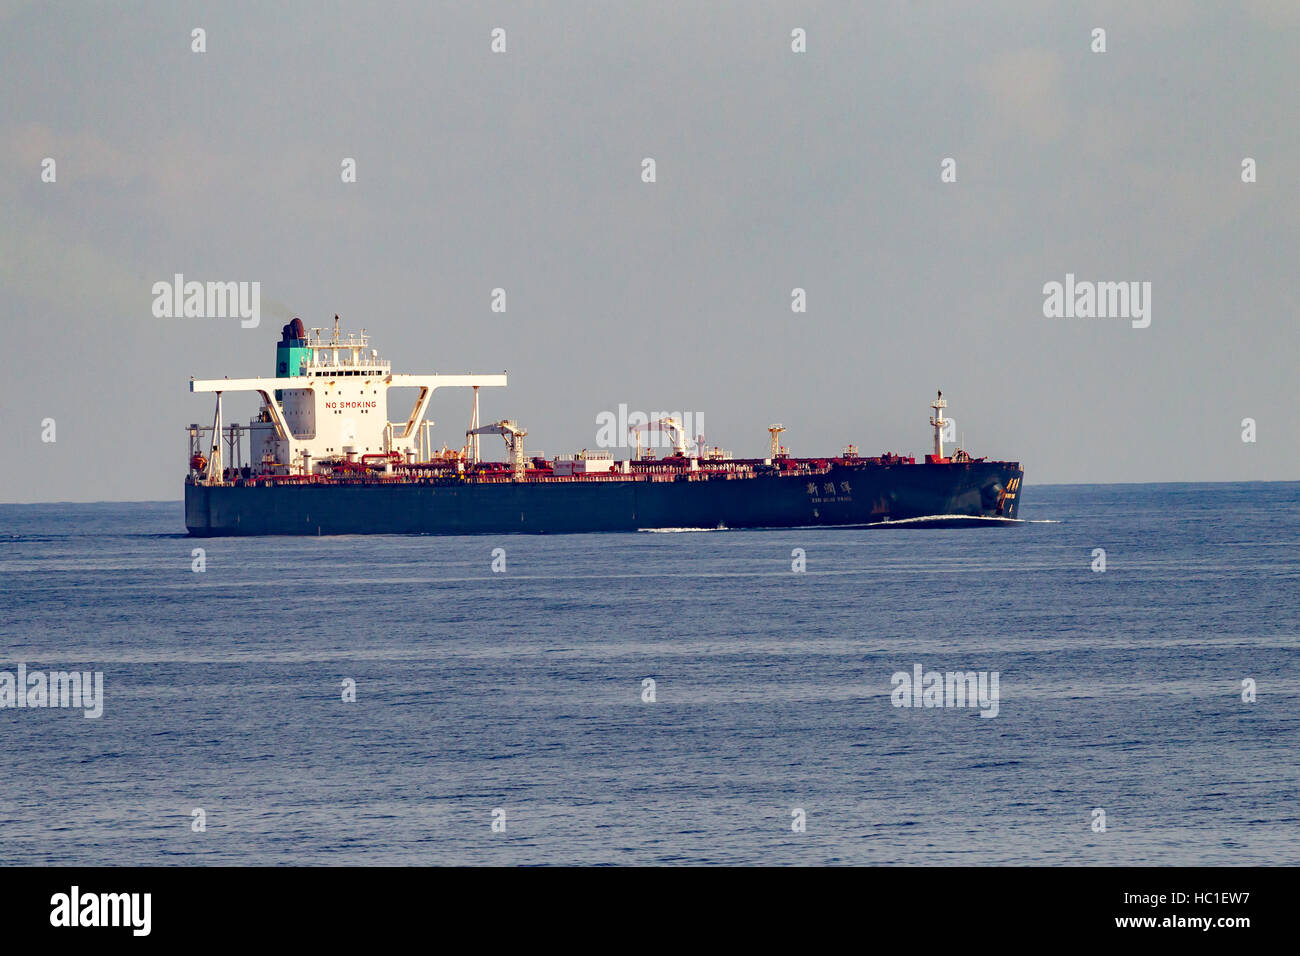 Crude Oil Tanker  XIN RUN YANG in the Mediterranean, Stock Photo